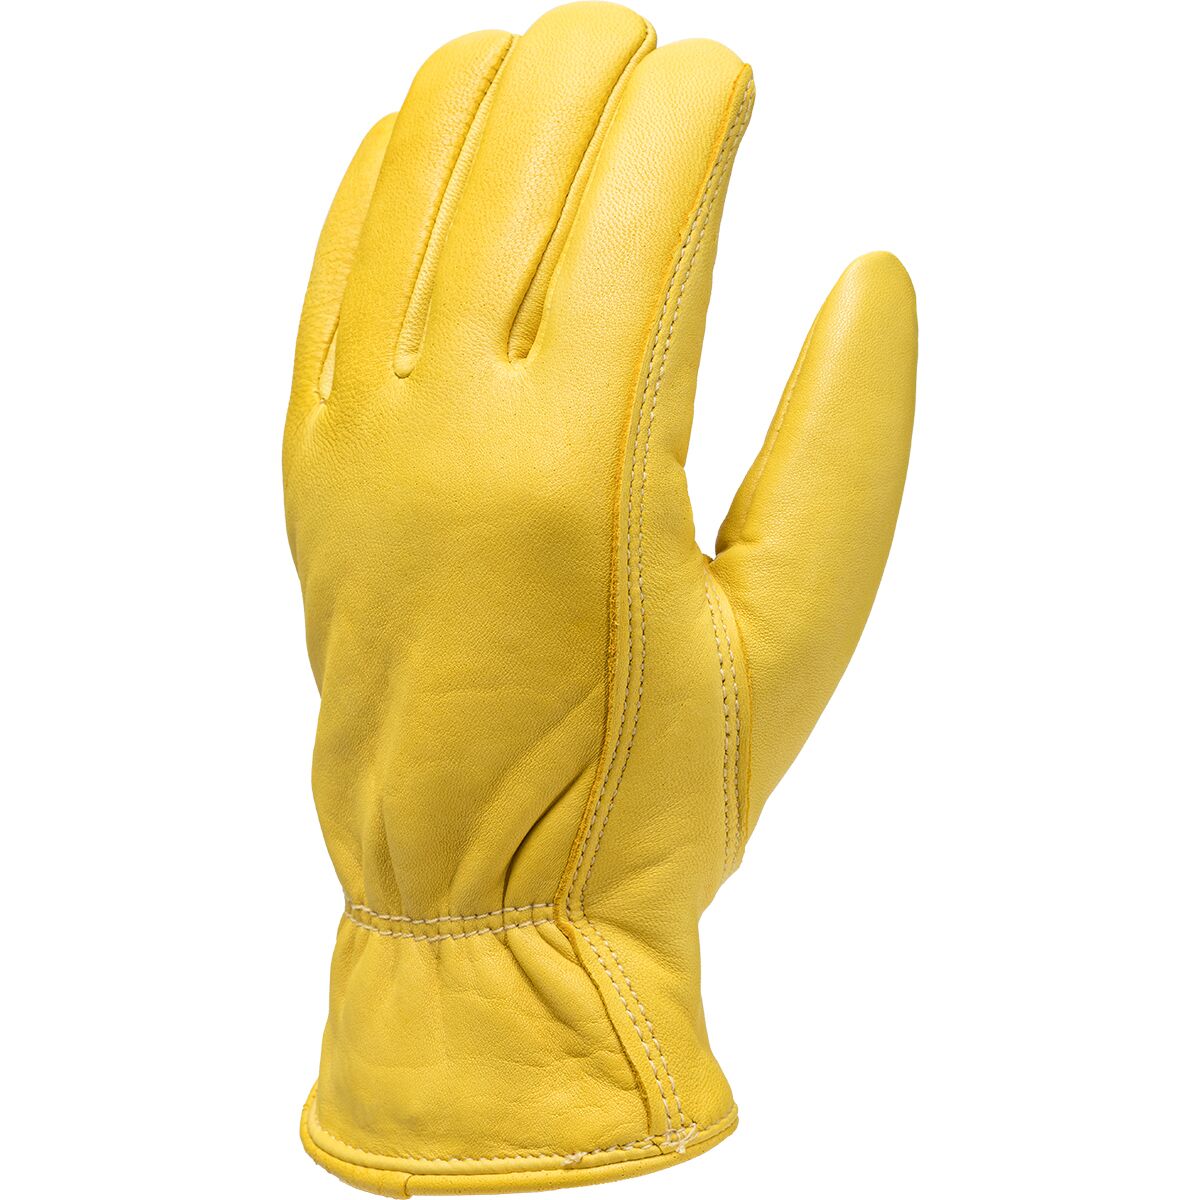 Kinco Lined Premium Grain Deerskin Driver Glove - Women's